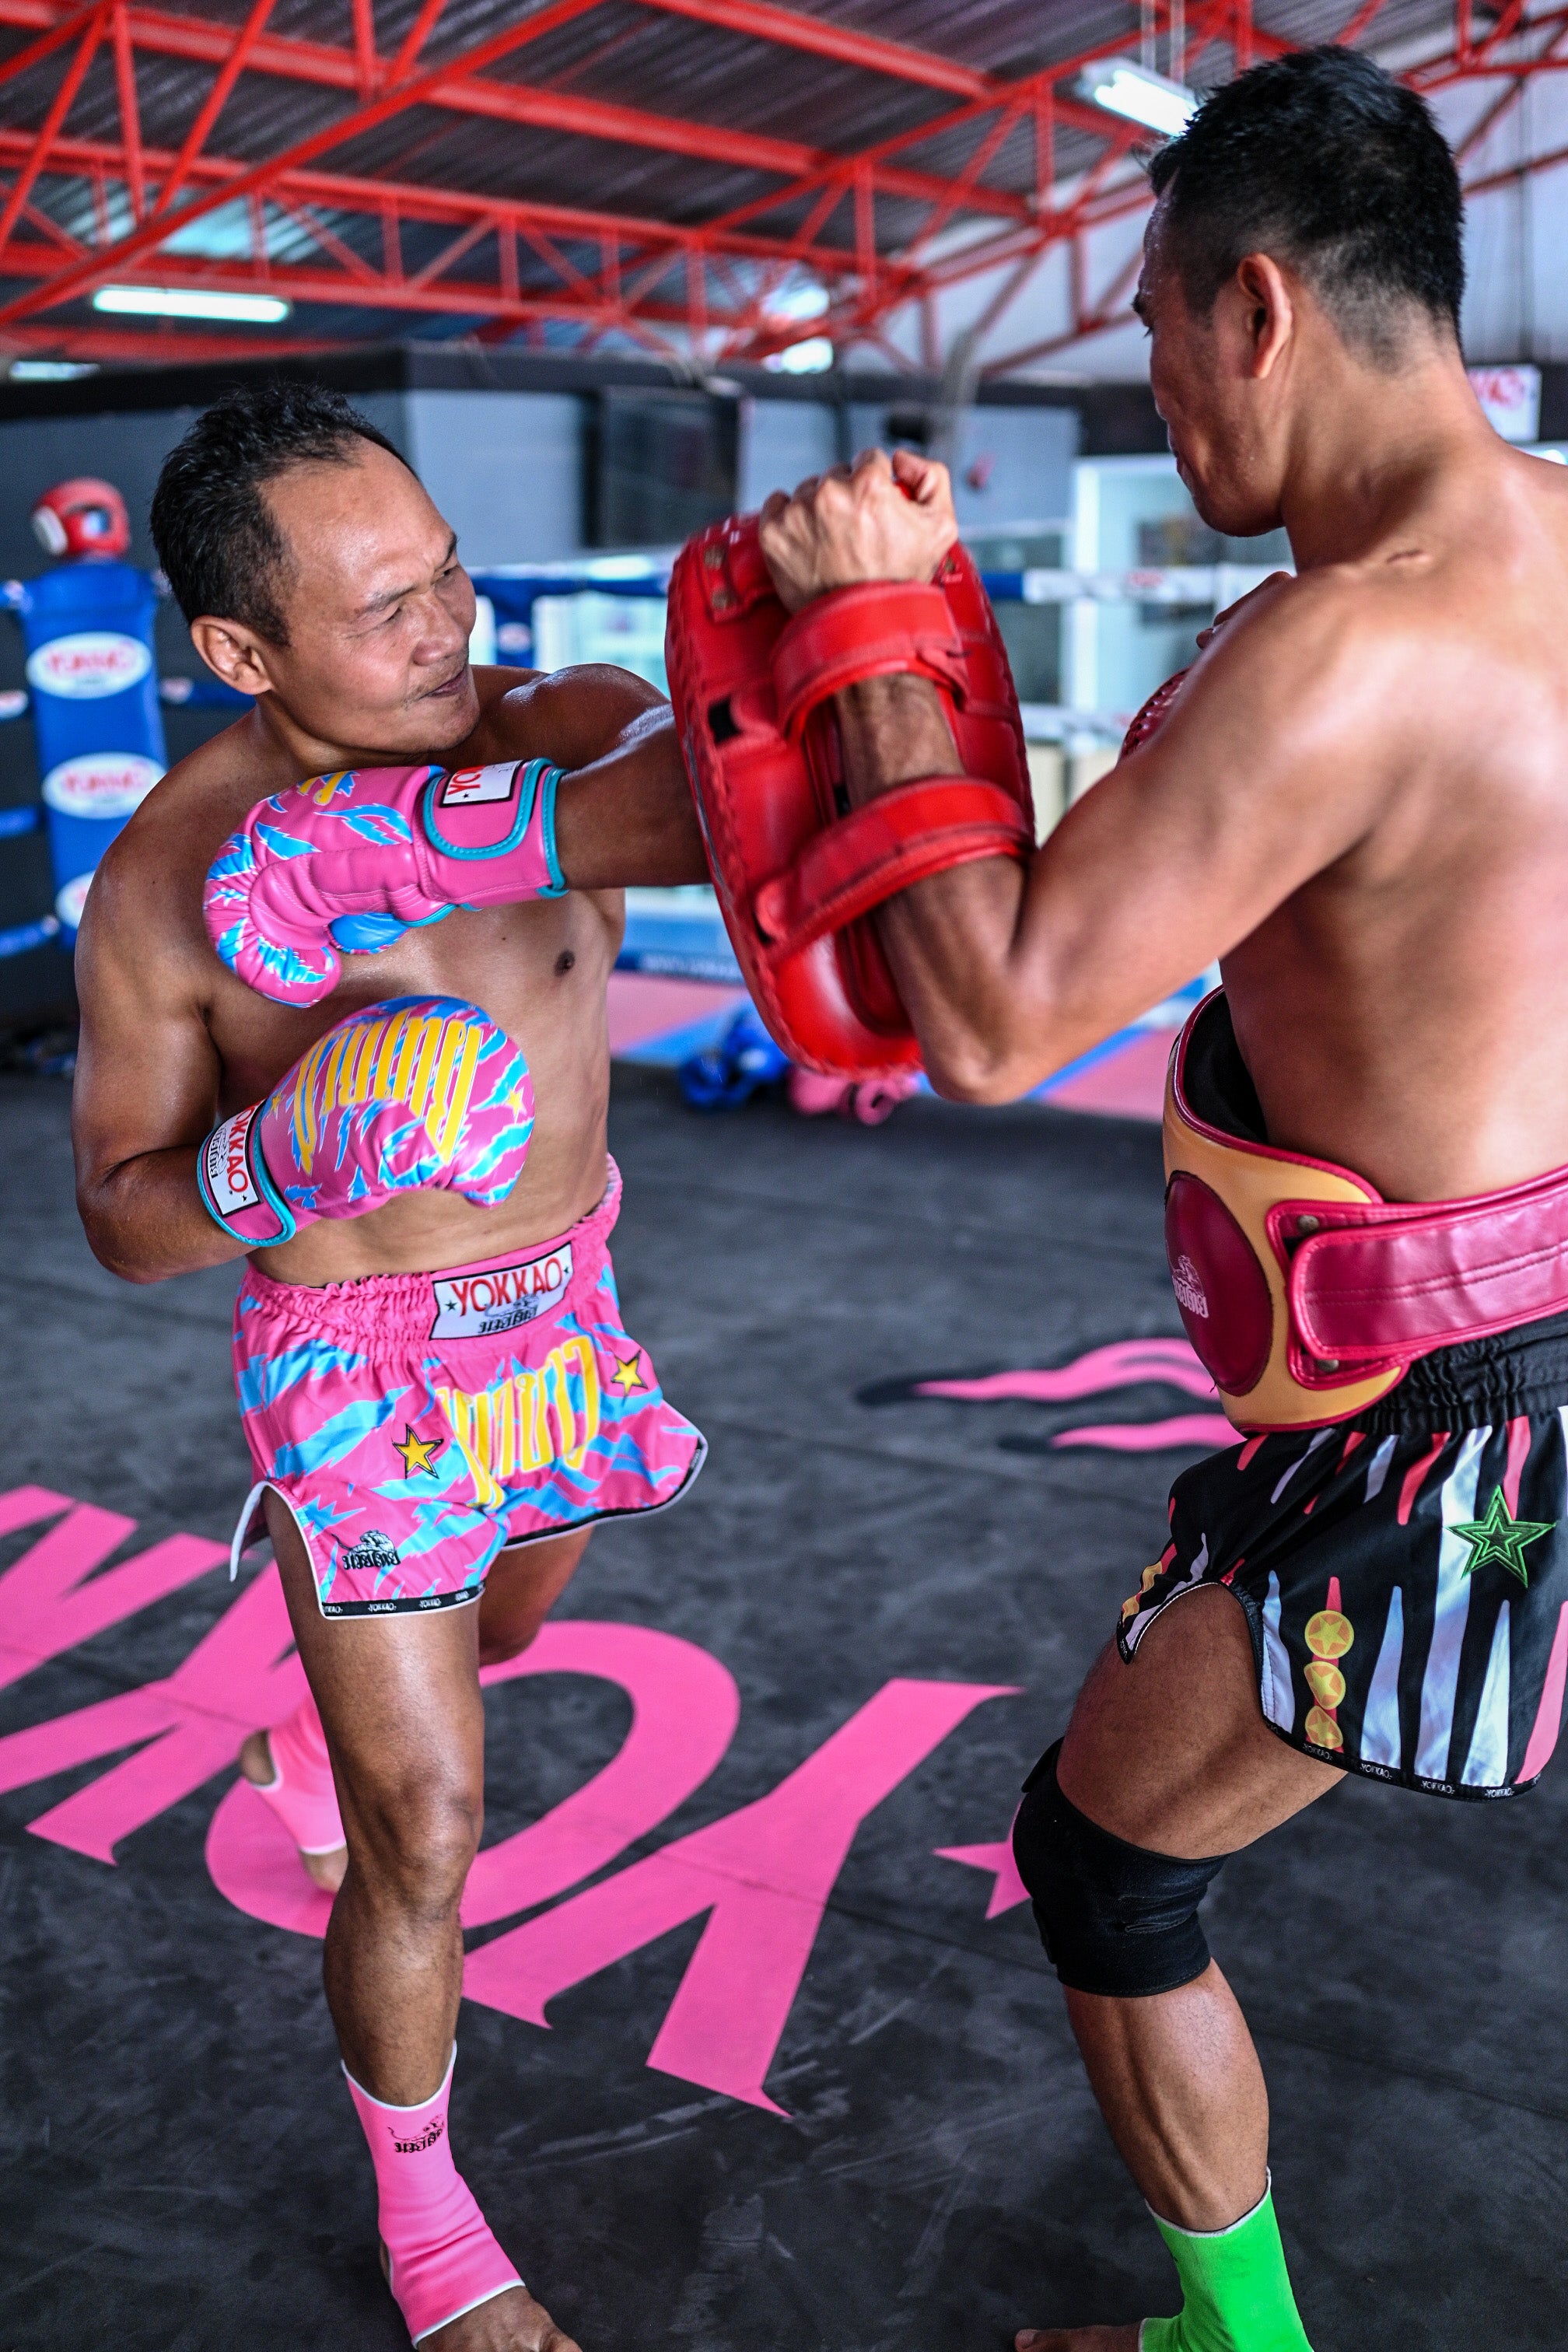 Essential Elbow Techniques in Muay Thai – YOKKAO